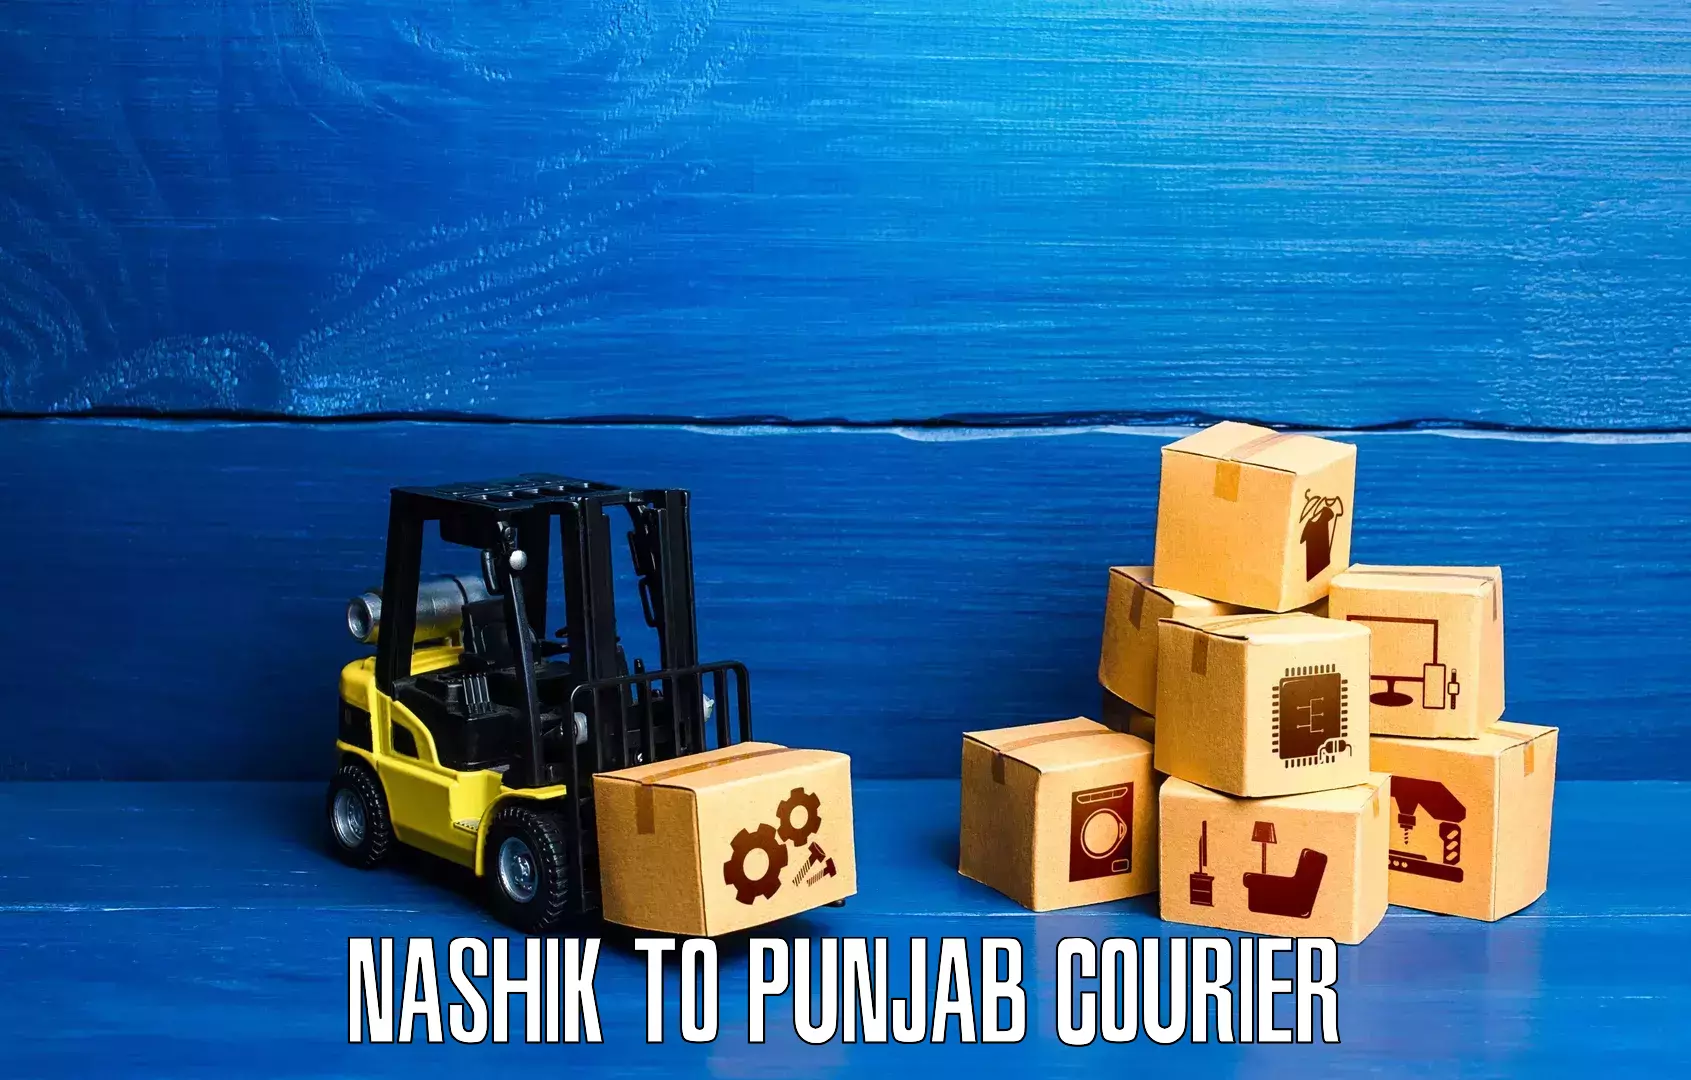 International courier networks Nashik to Punjab